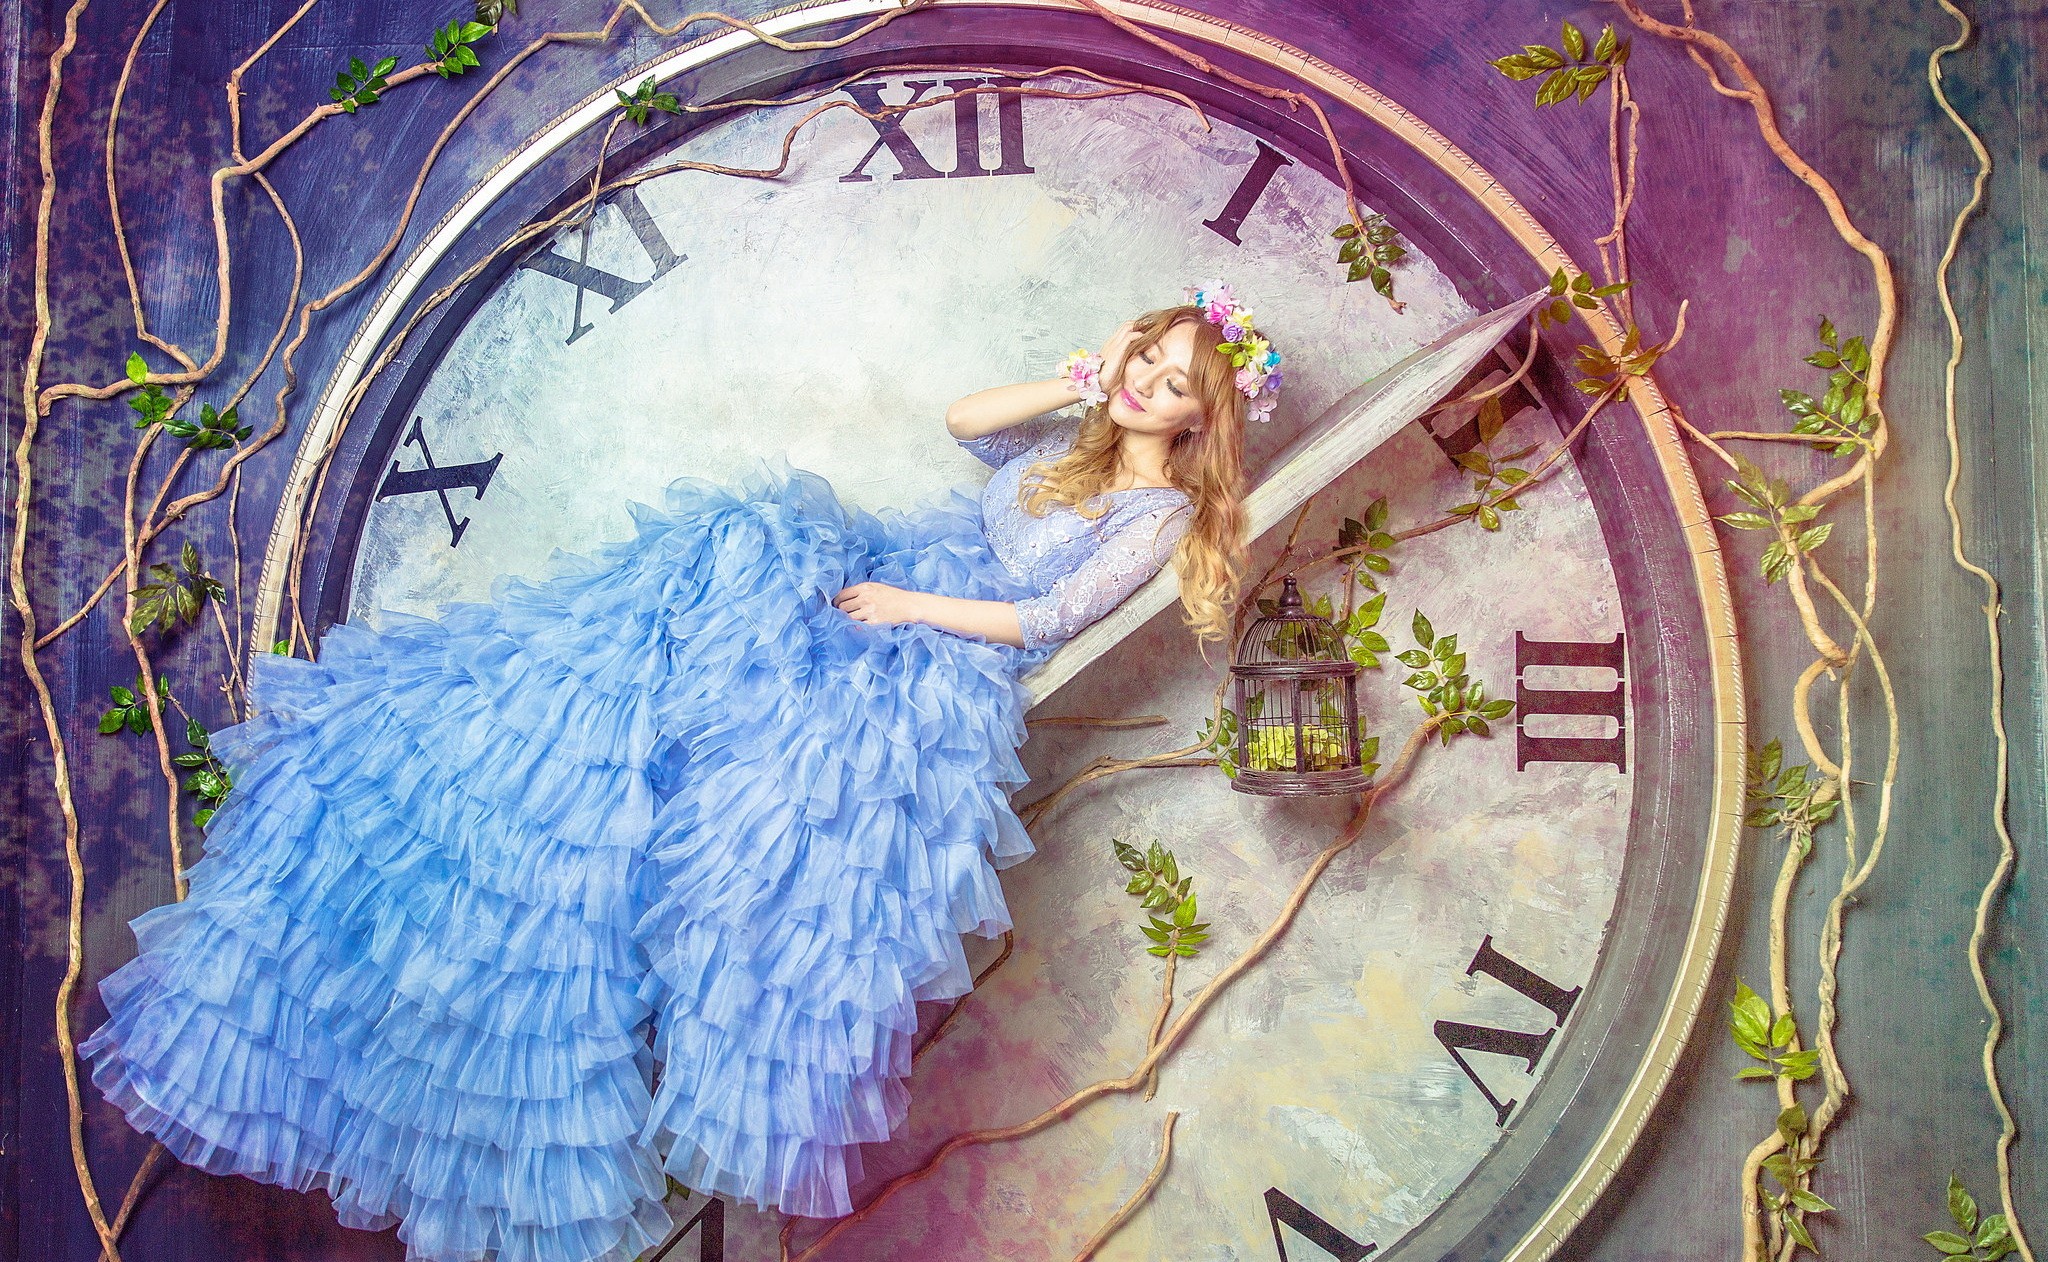 People 2048x1262 clocks women fantasy art model Alice fantasy girl closed eyes dress cages blue dress